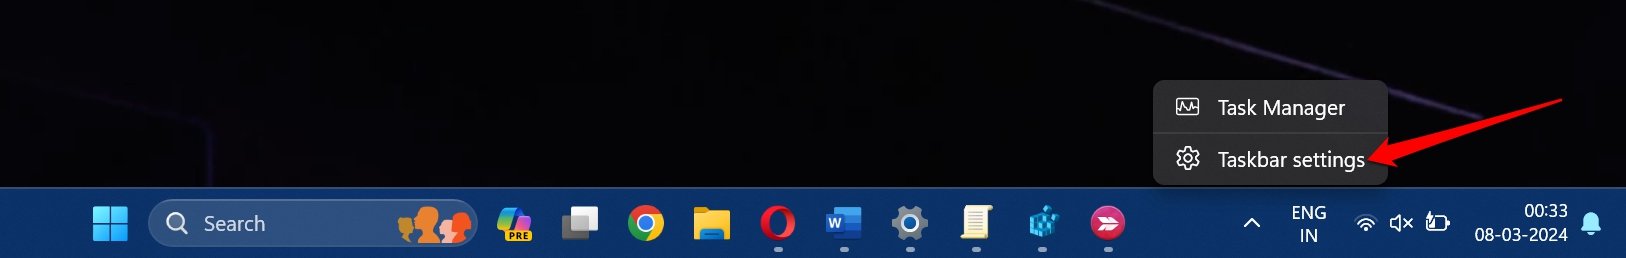 windows 11 taskbar settings